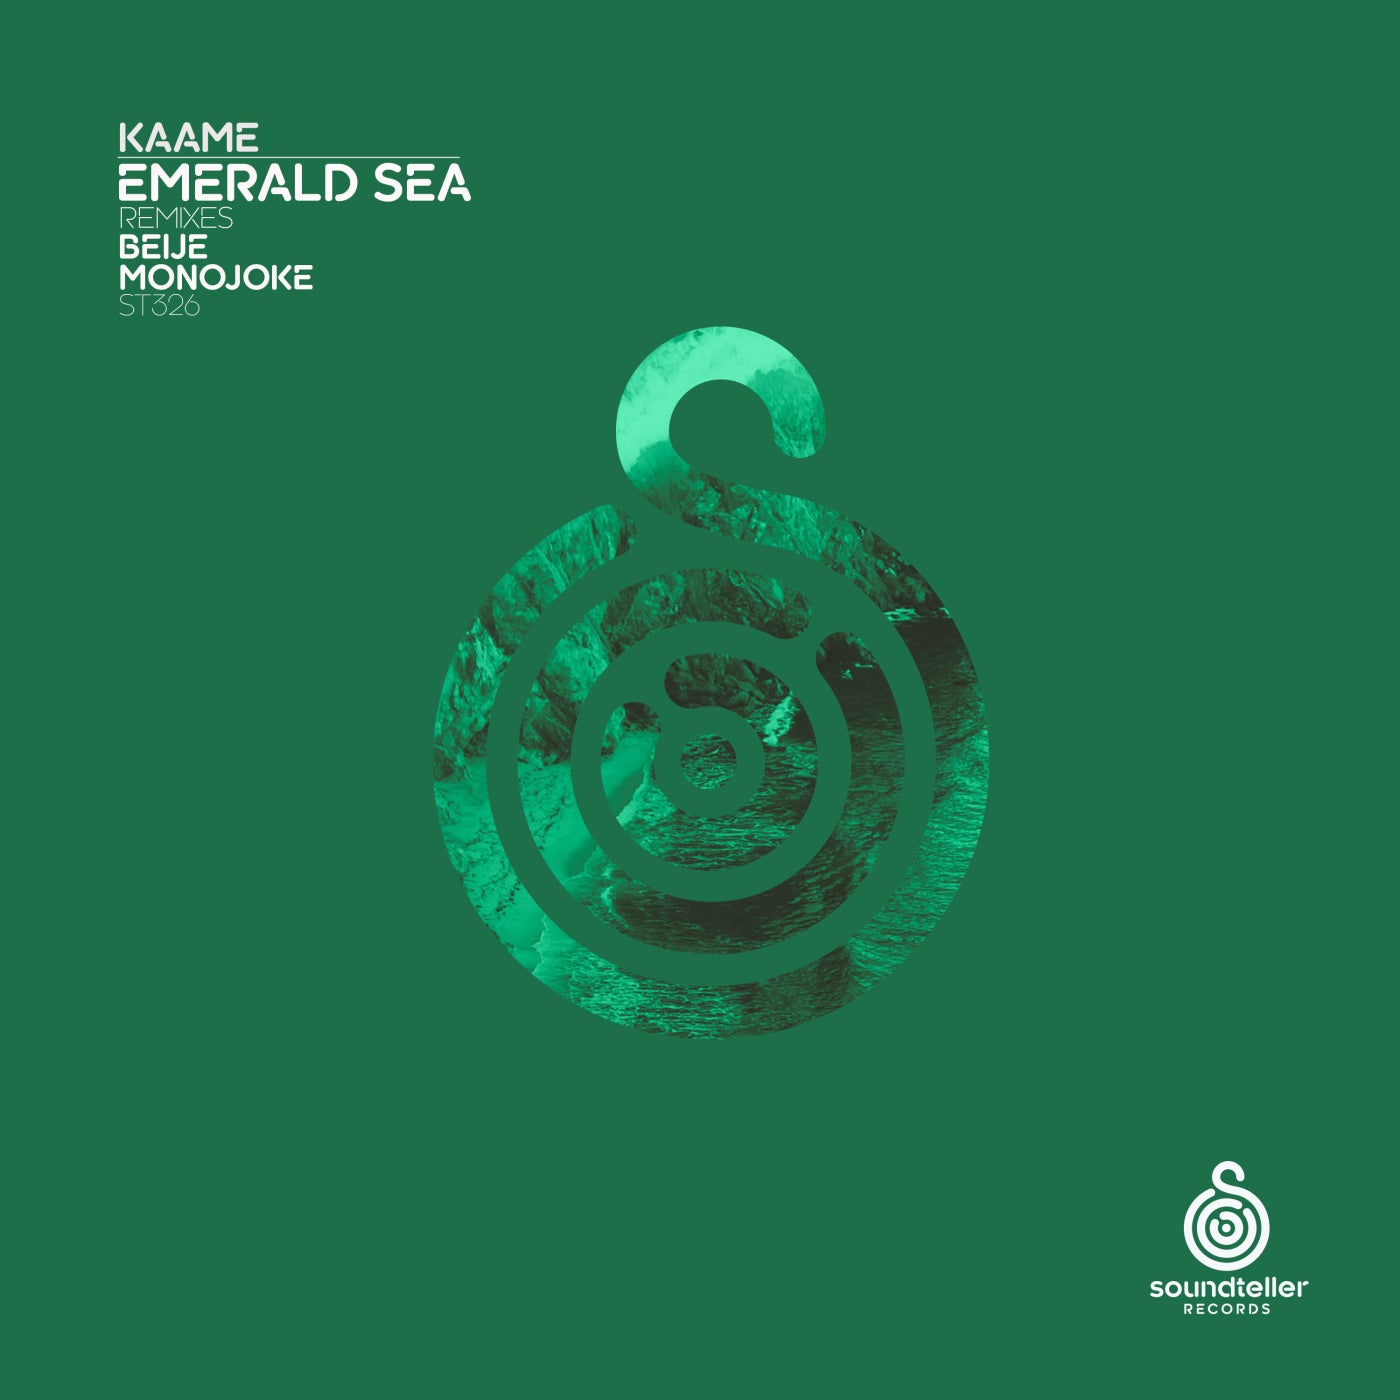 Kaame - Emerald Sea [ST326]